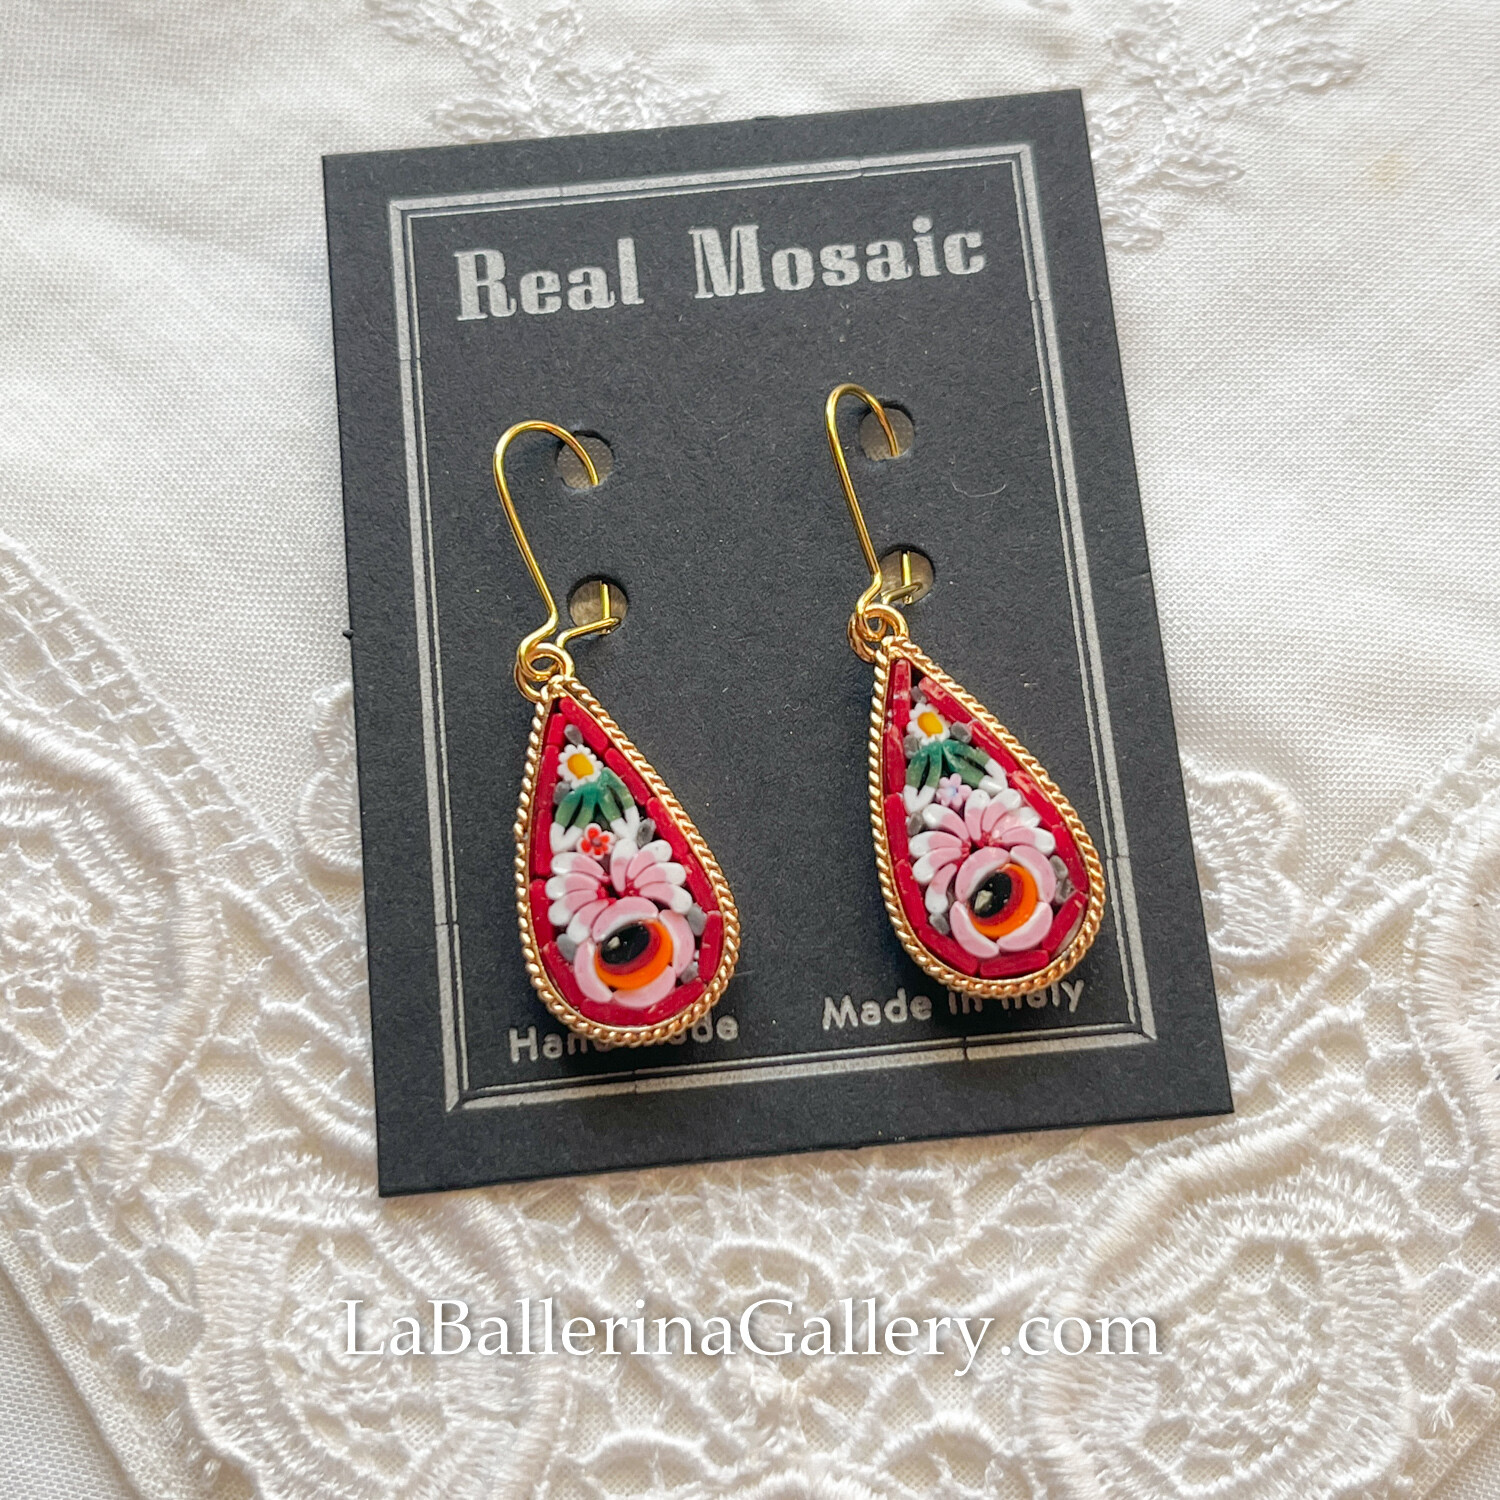 IN STOCK Florentine micromosaic jewelry earrings drop red rose